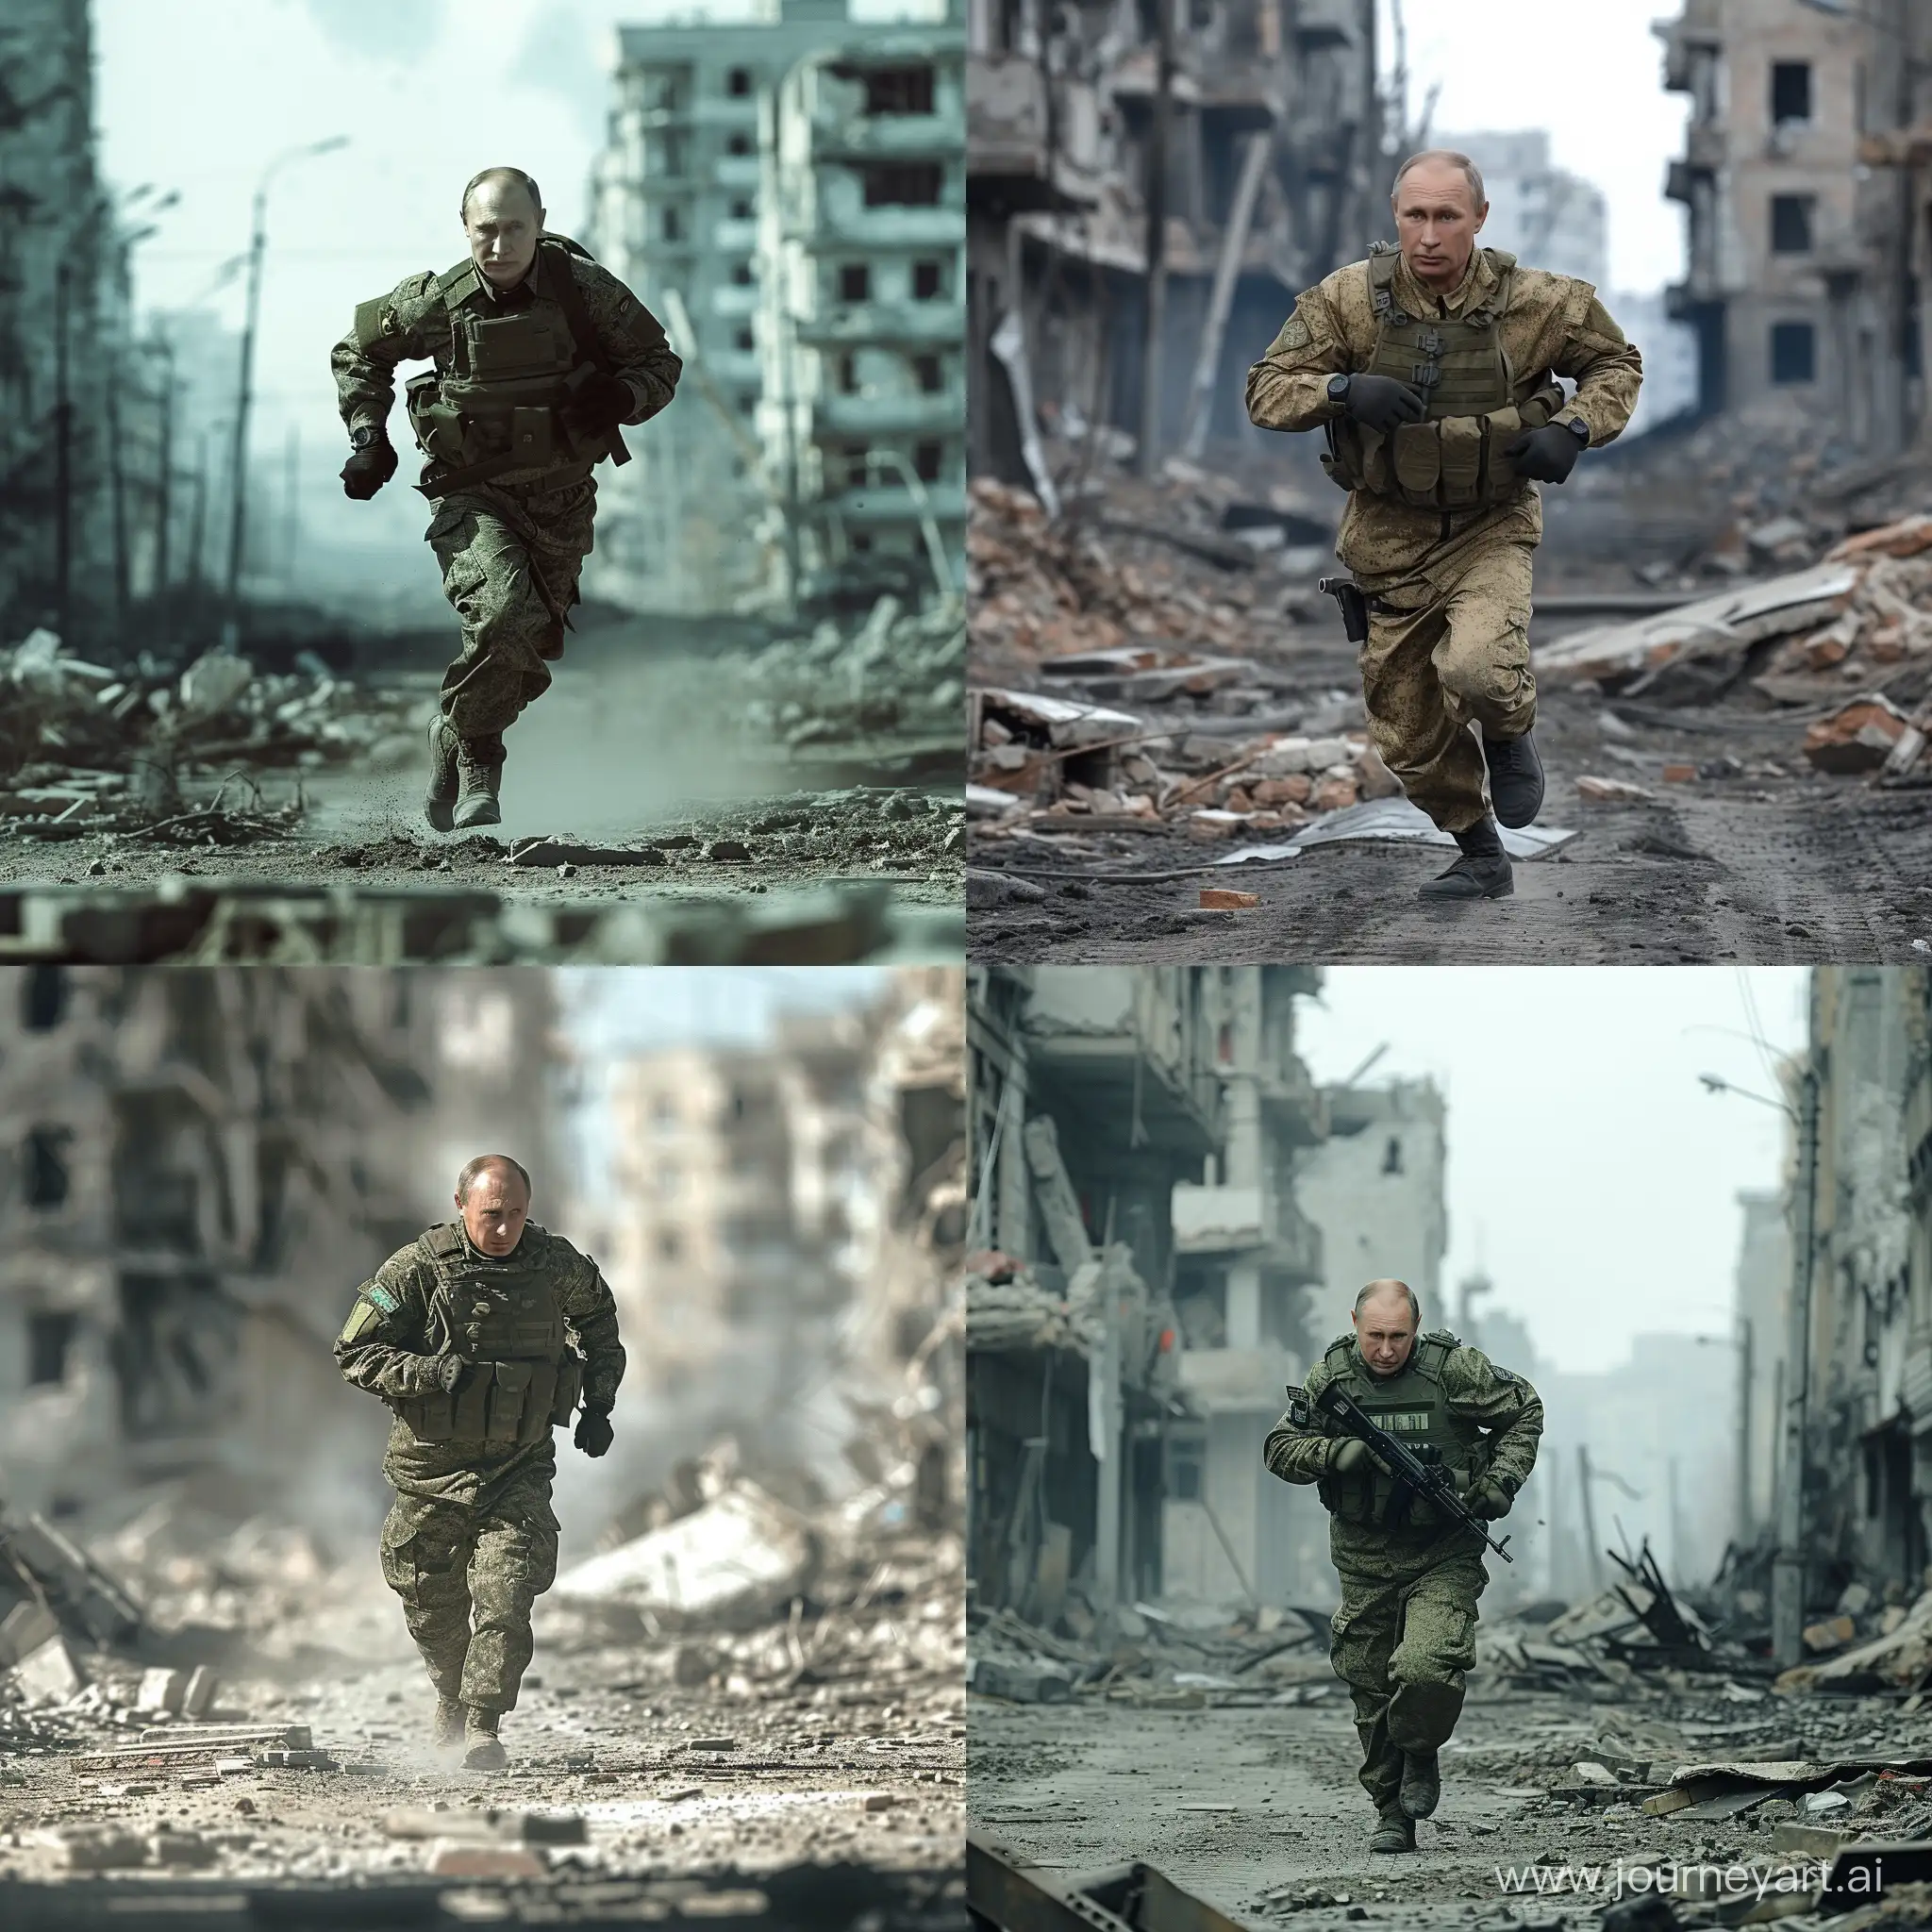 PutinLookalike-Soldier-Running-in-WarTorn-City